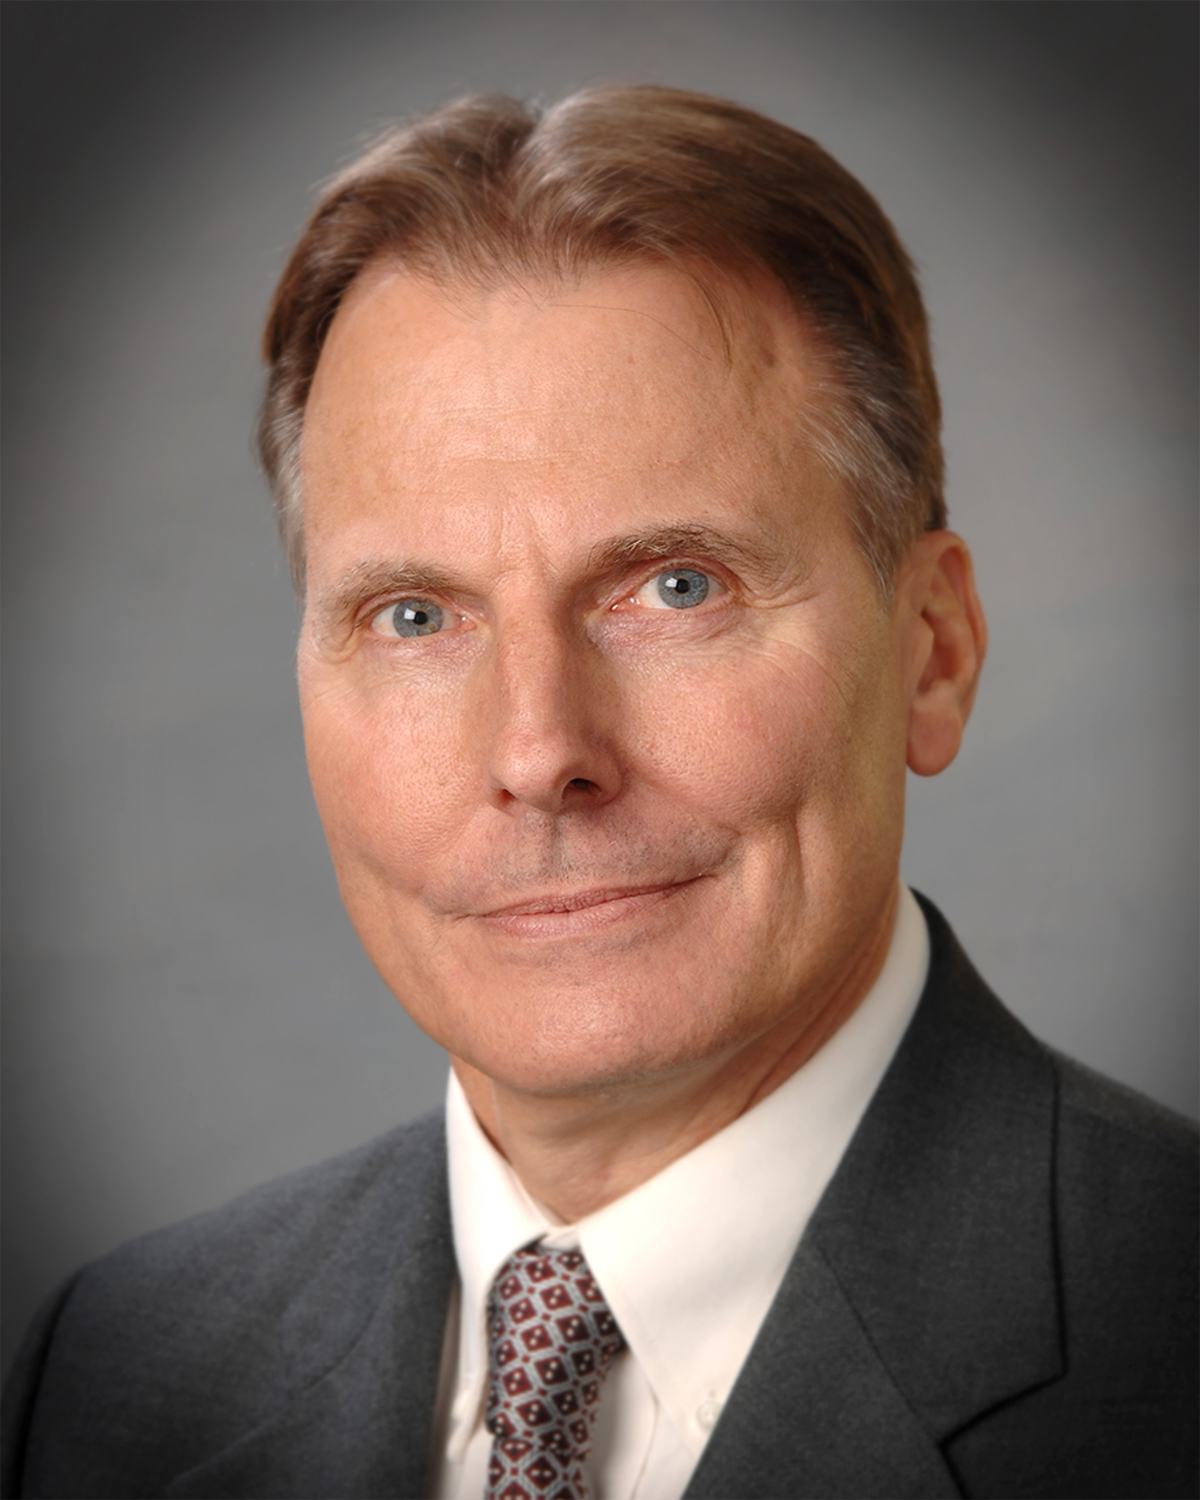 Stephen Stratz, ASIC North's VP and Secretary